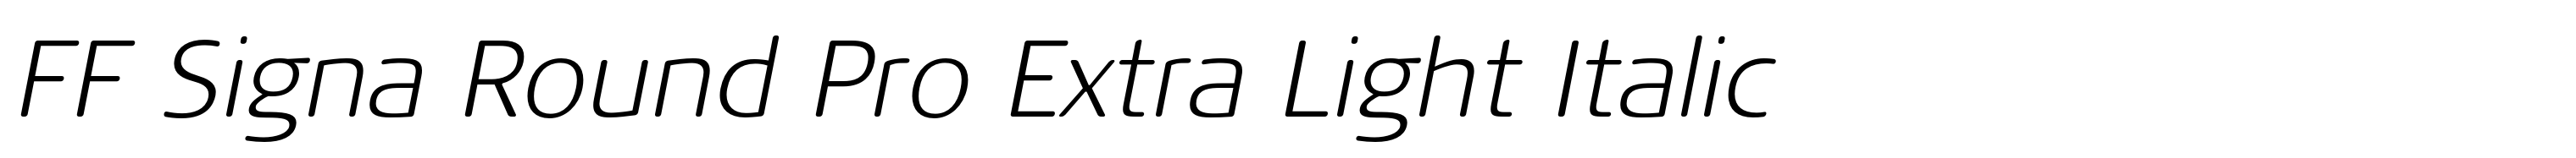 FF Signa Round Pro Extra Light Italic